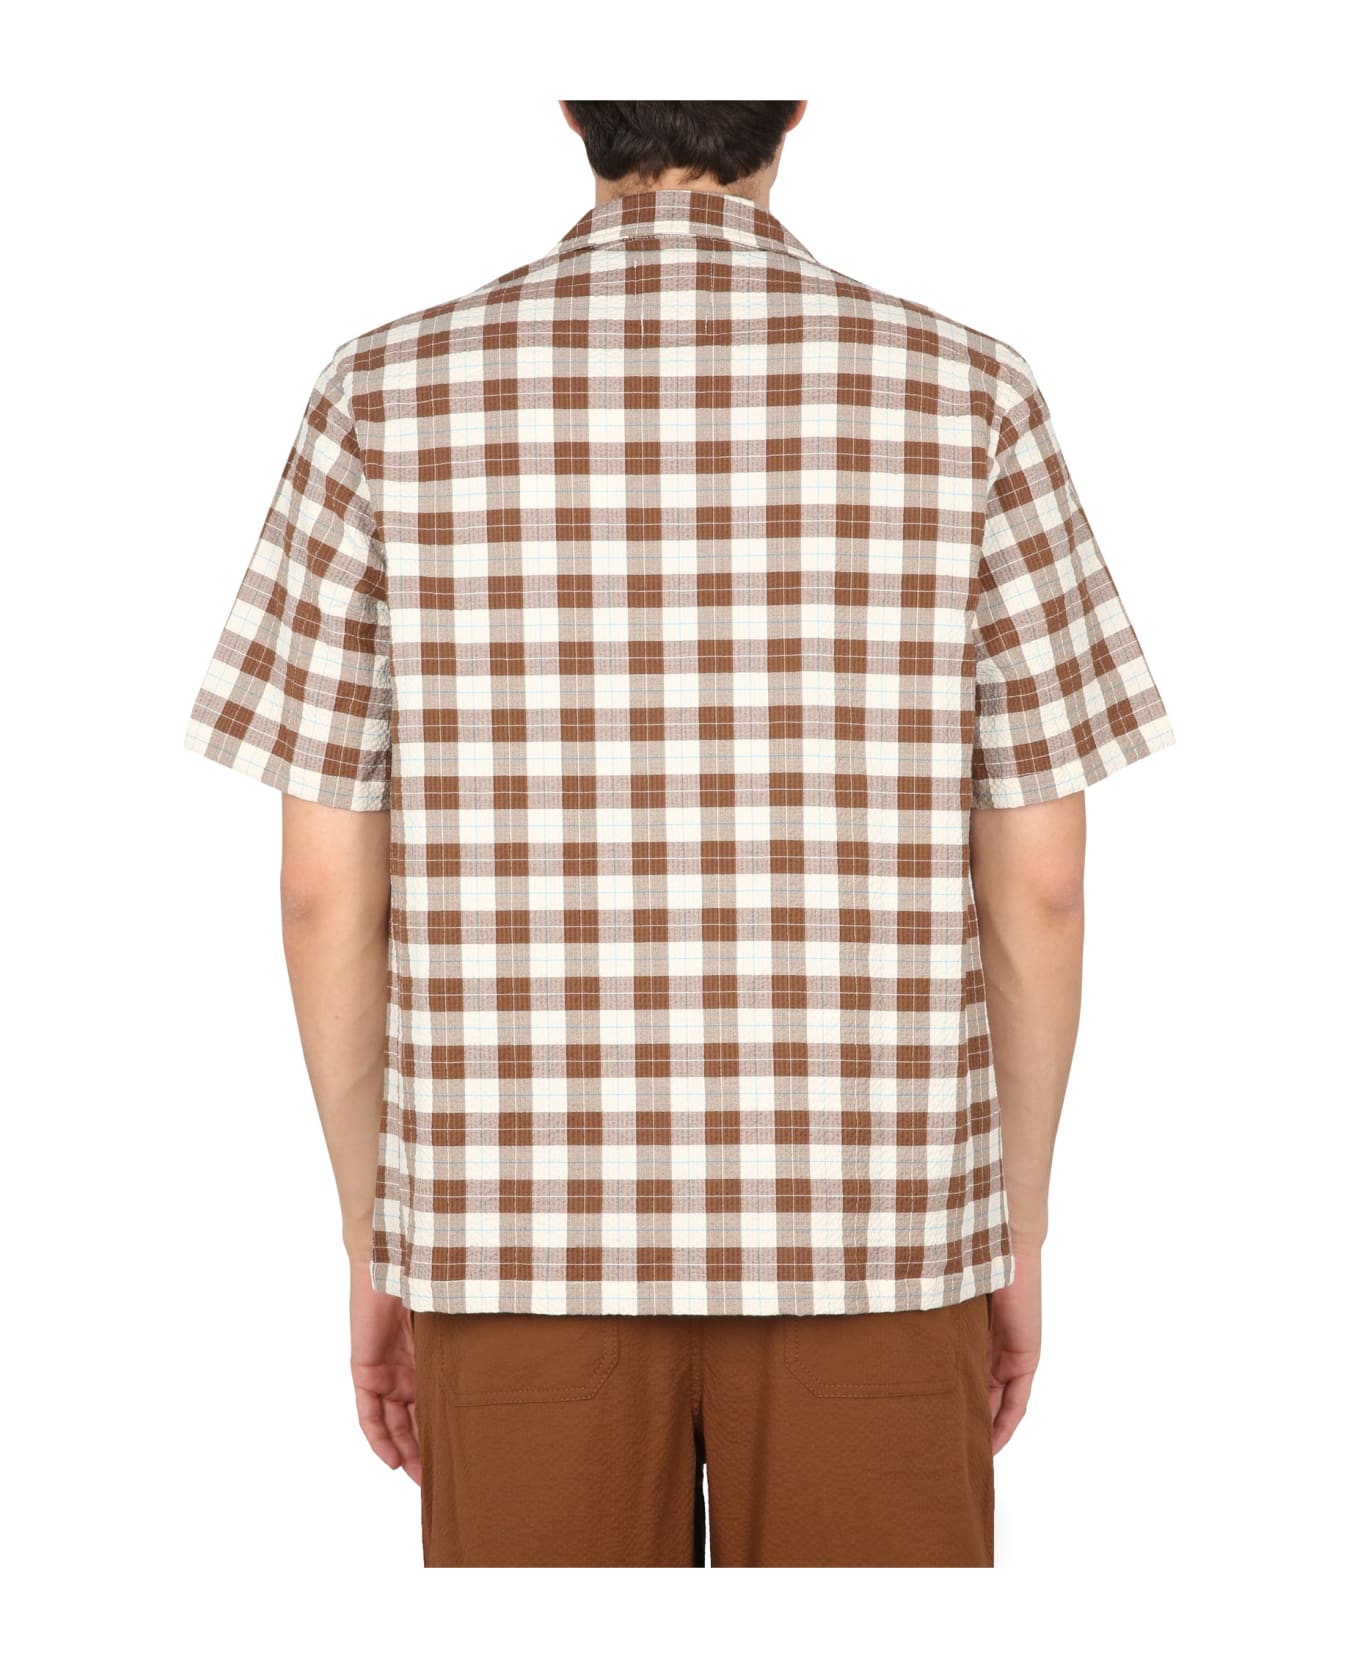 Howlin Cotton Shirt - MARRONE